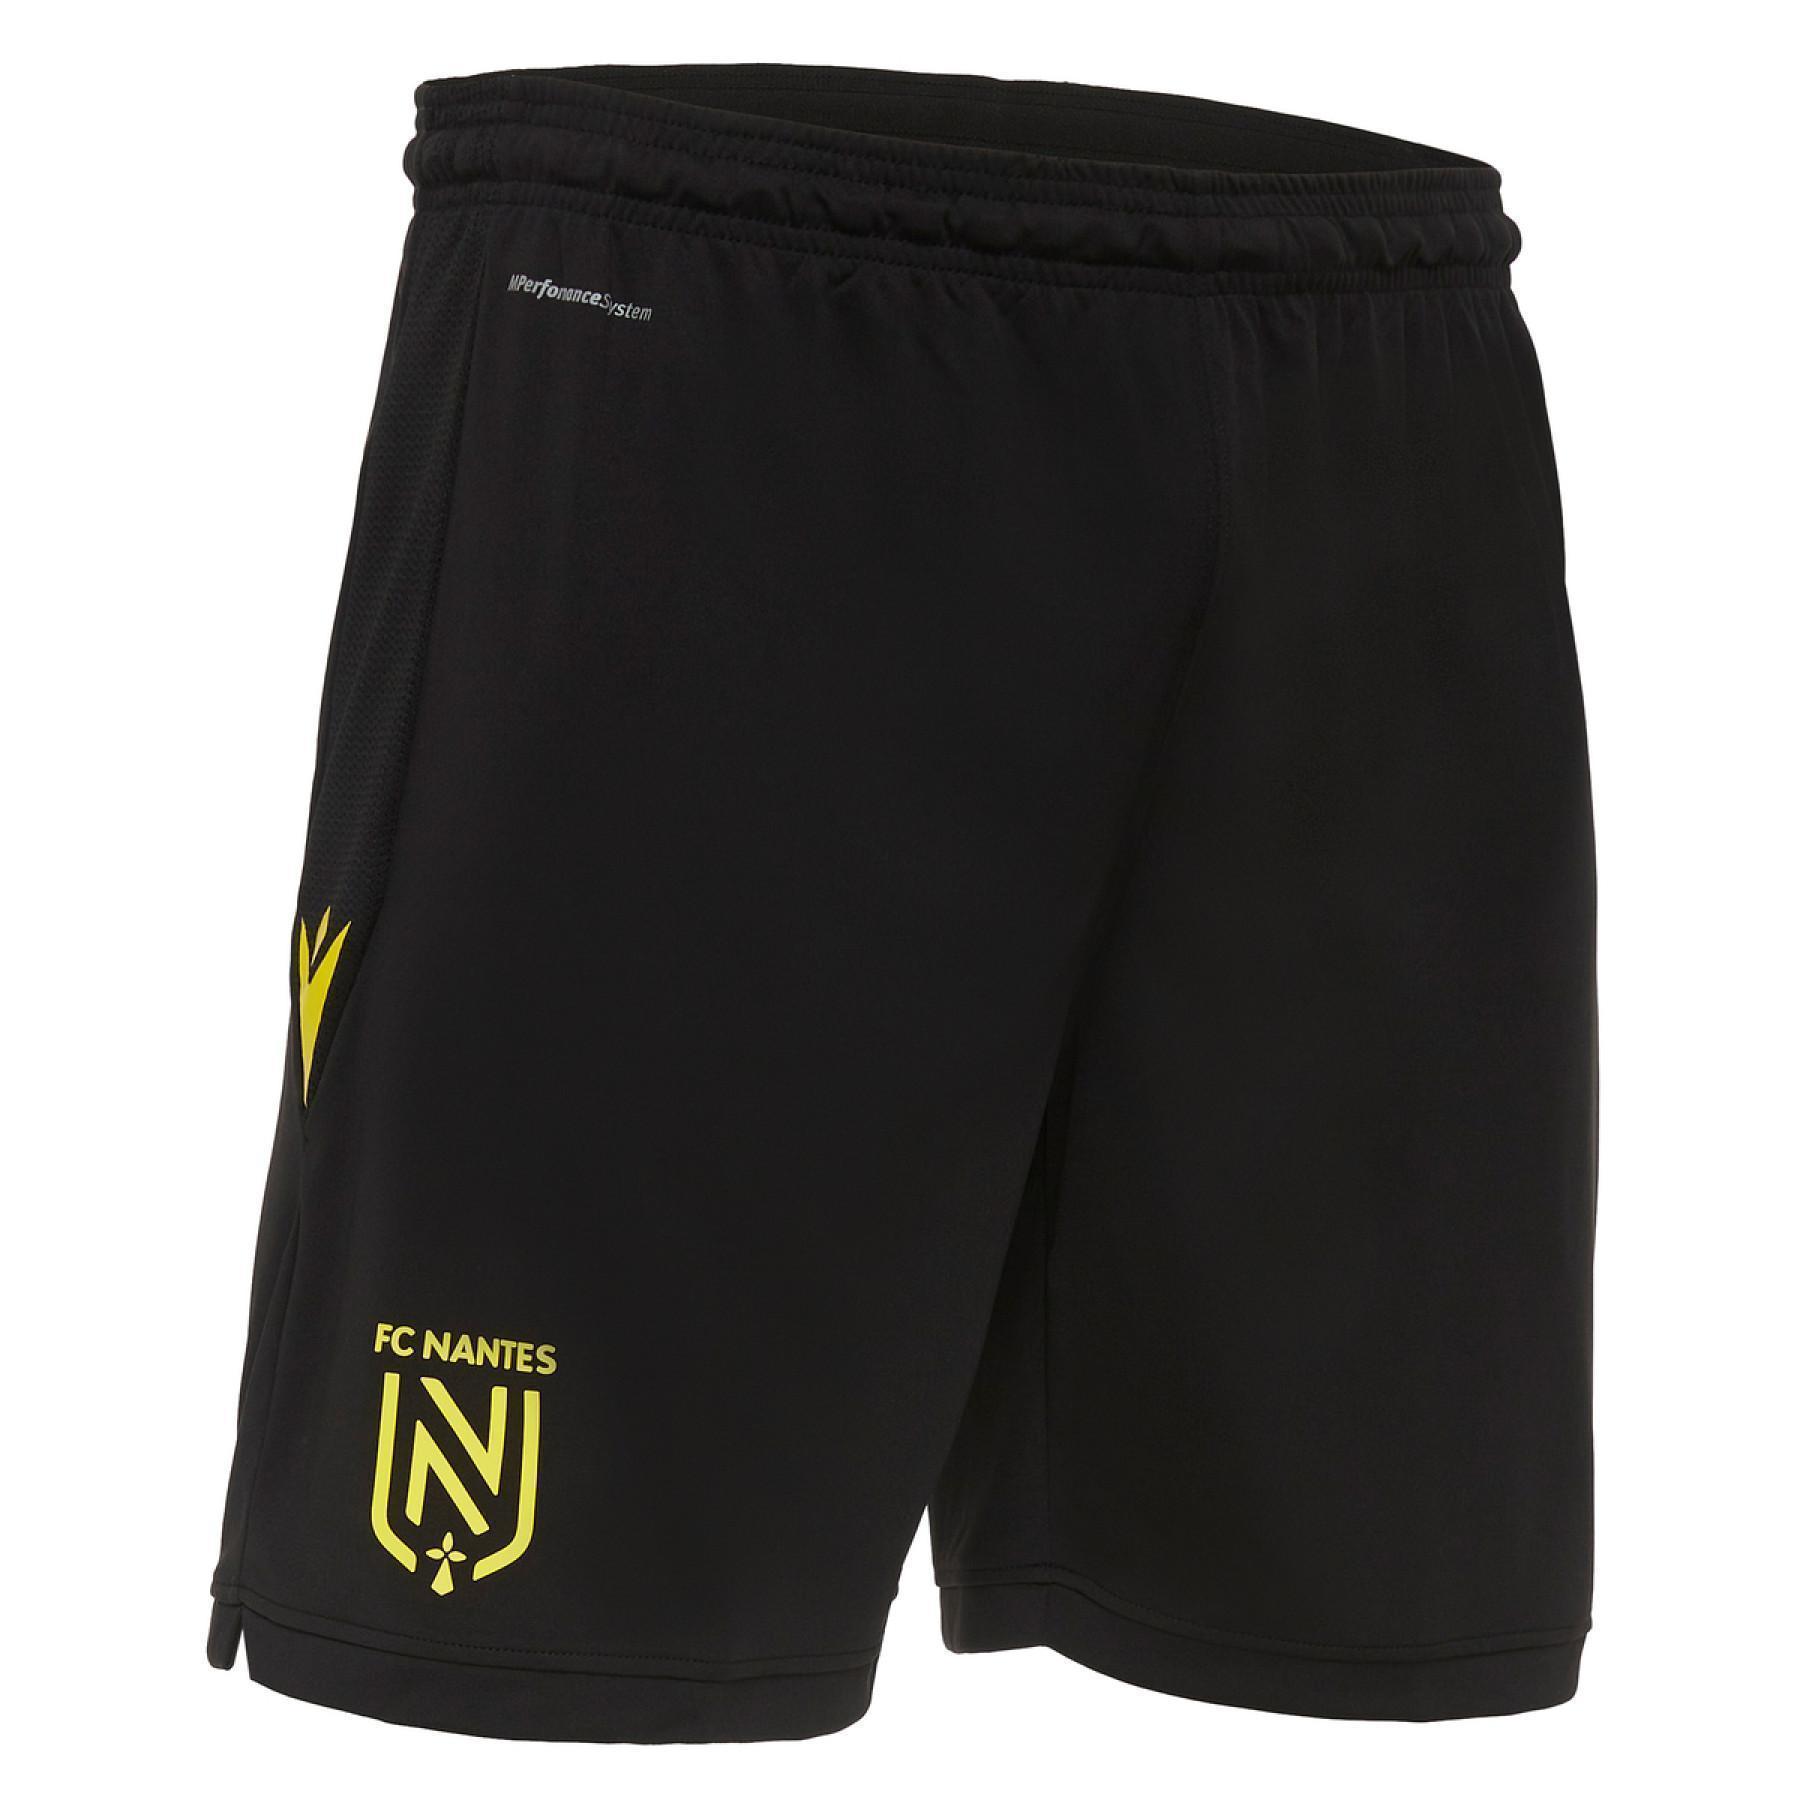 Outdoor shorts FC Nantes 2020/21